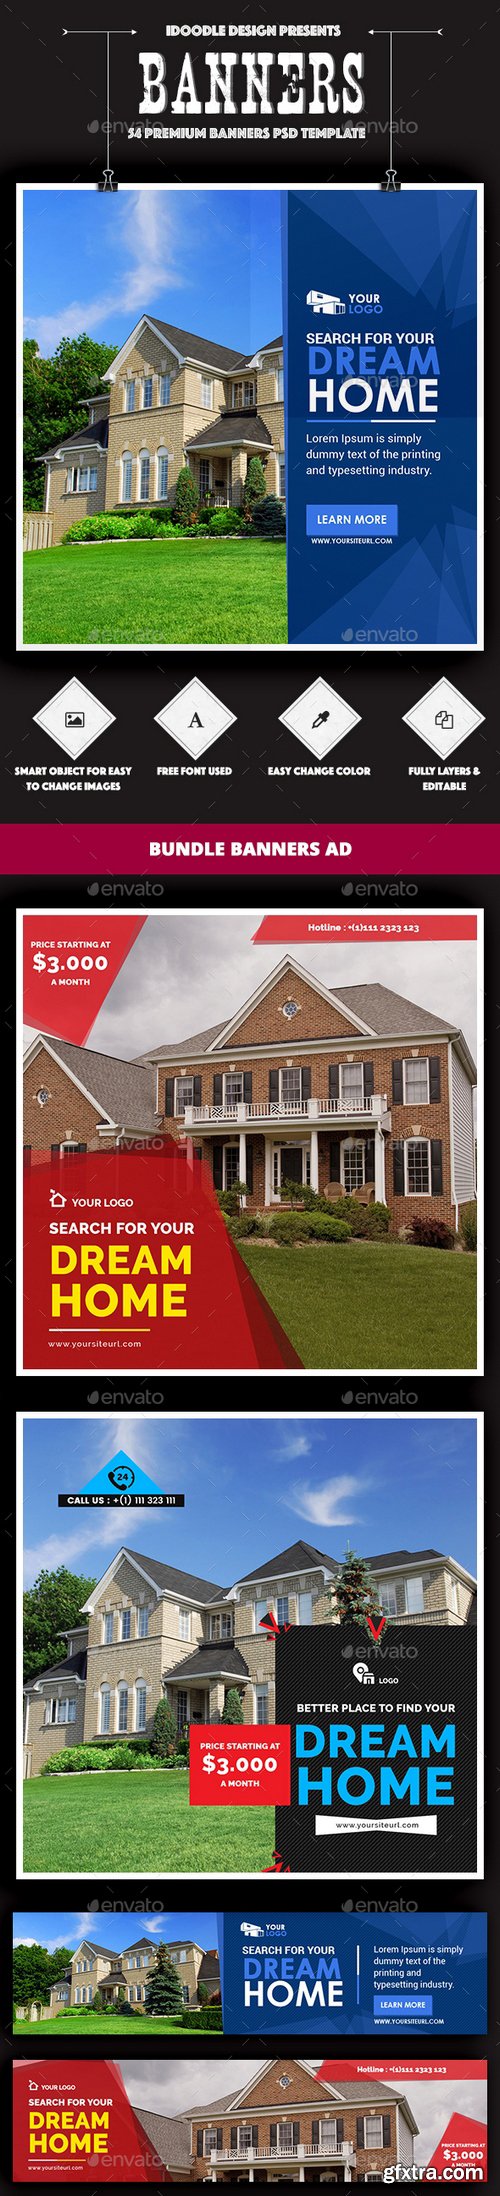 Graphicriver - Bundle Real Estate Banners Ads - 54 PSD [03 Sets] 16410069